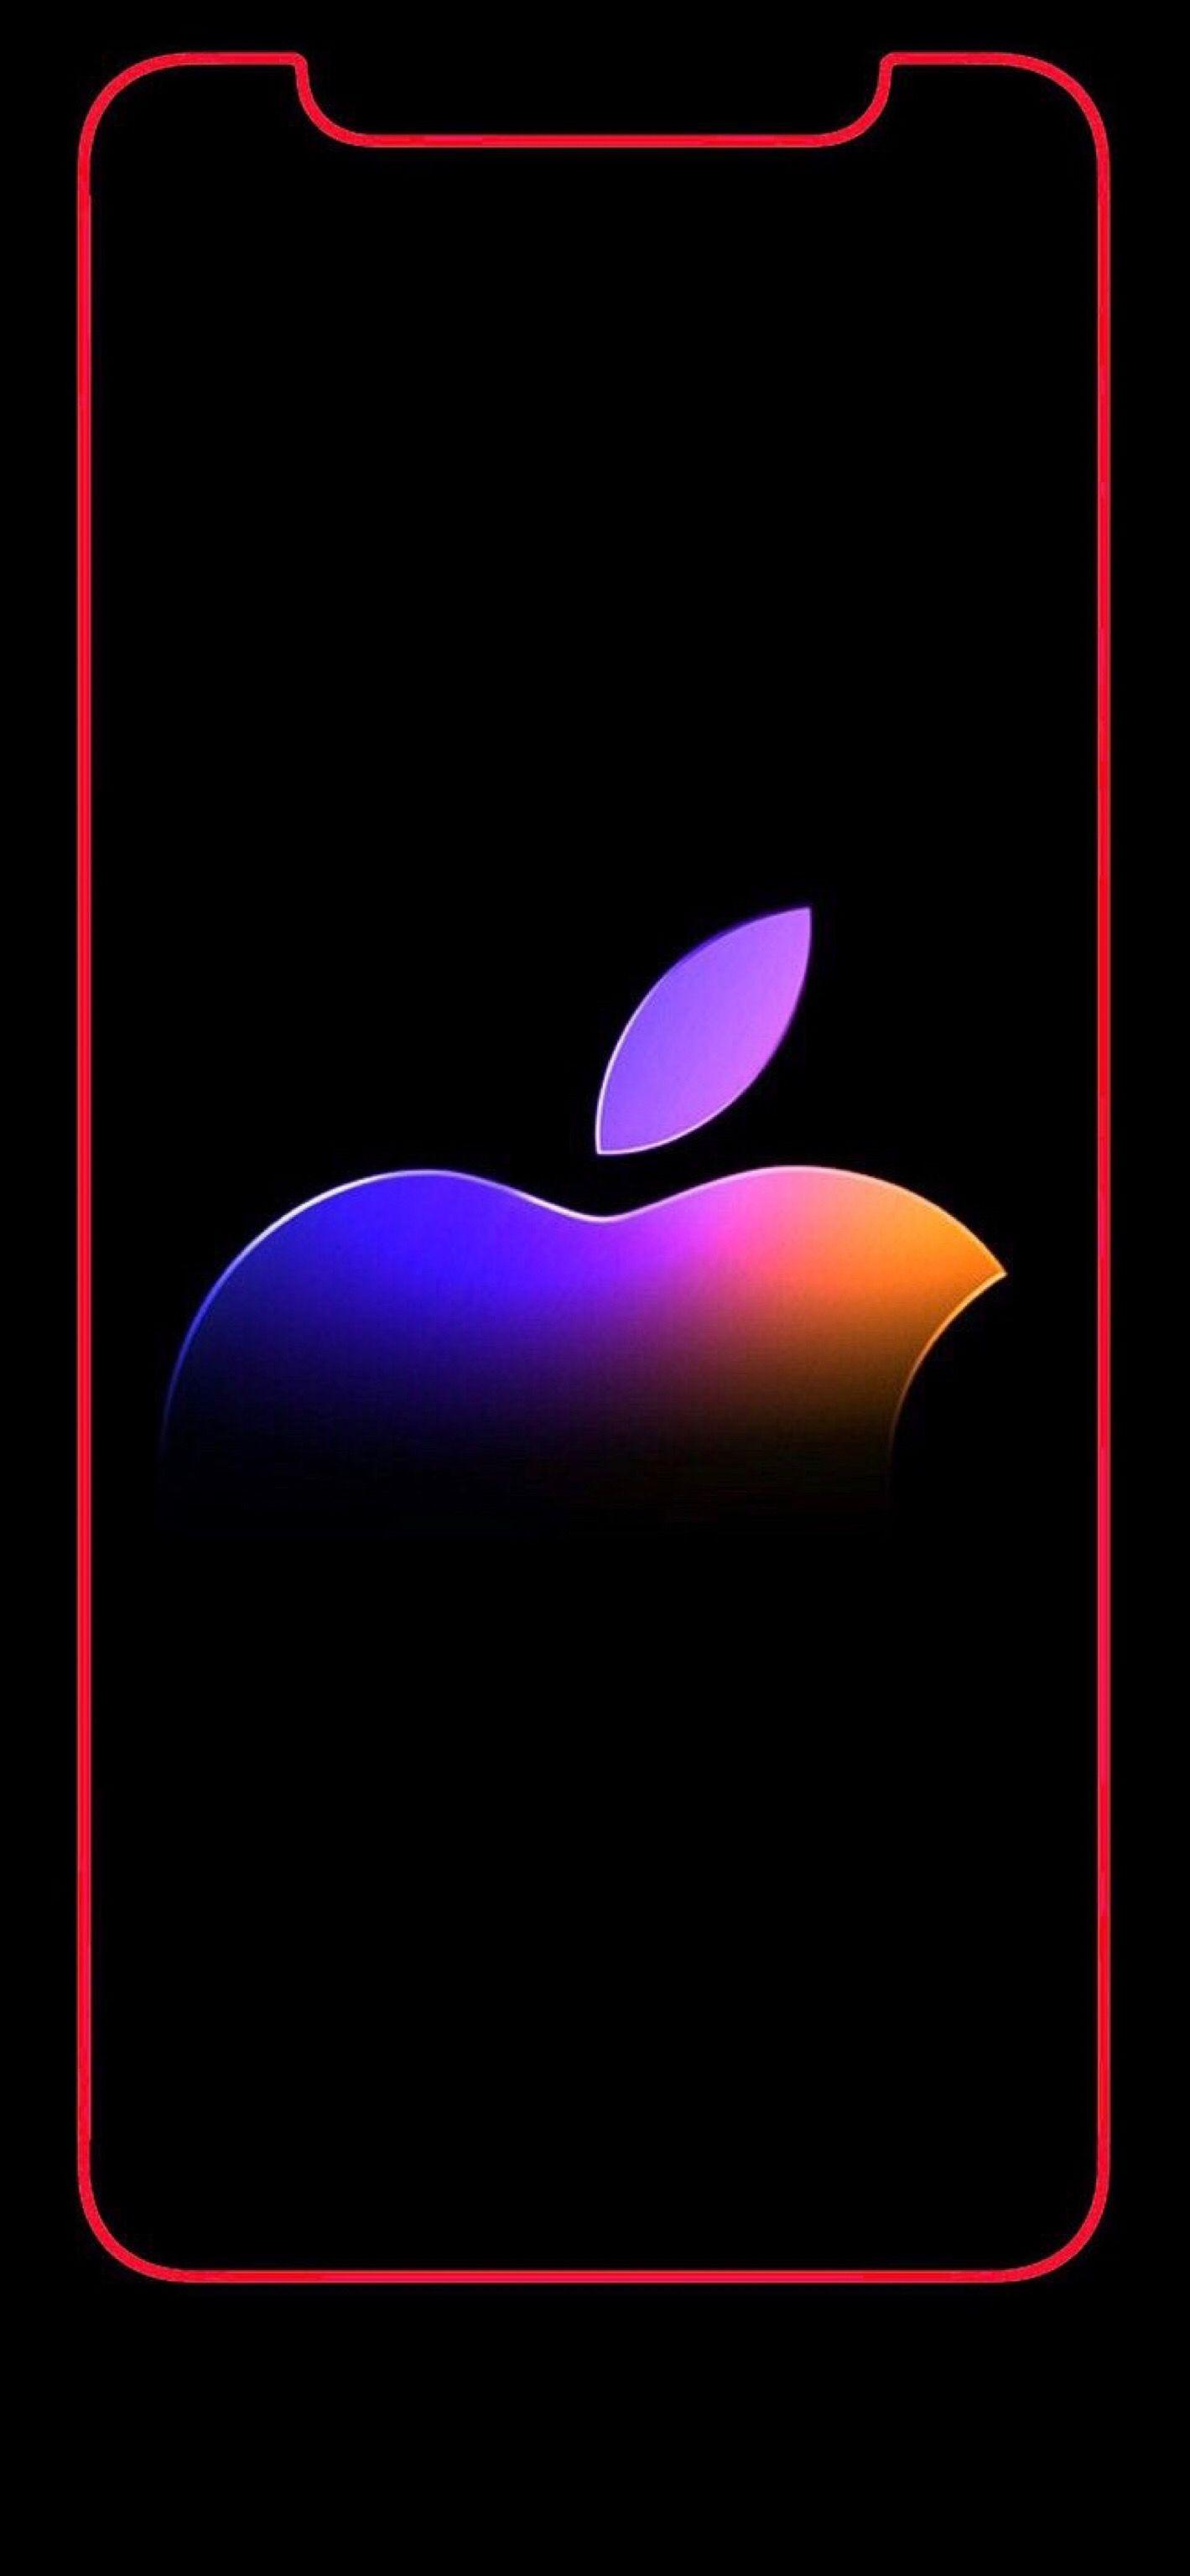 Wallpaper iPhone X logo rainbow 4. Apple logo